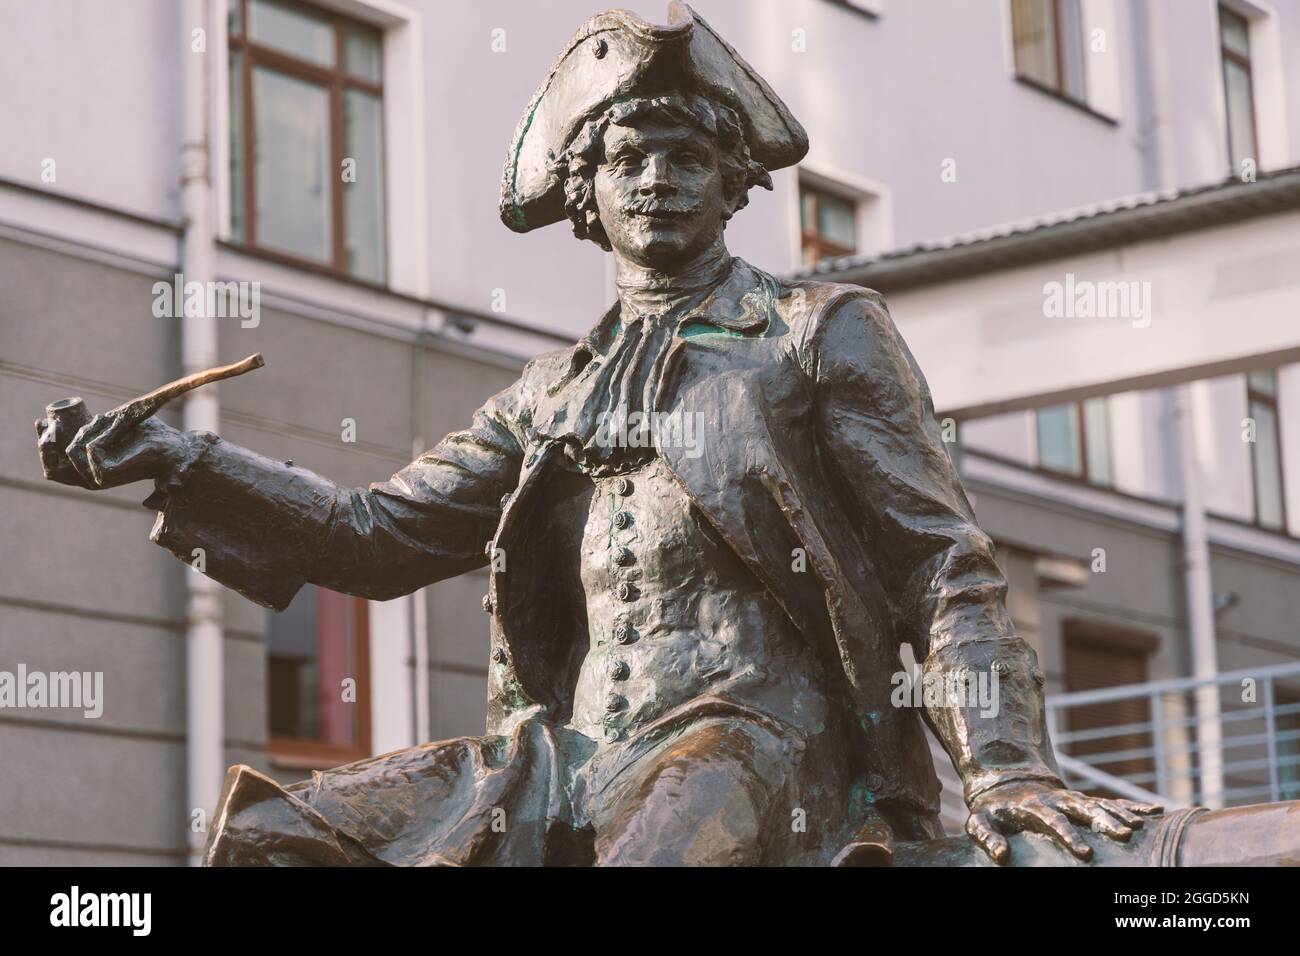 Sankt Petersburg, Russland - 04. April 2021: Statue des berühmten Vasilij Korchmin, eines Mitarbeiters des russischen Imperators Peter des Großen Stockfoto